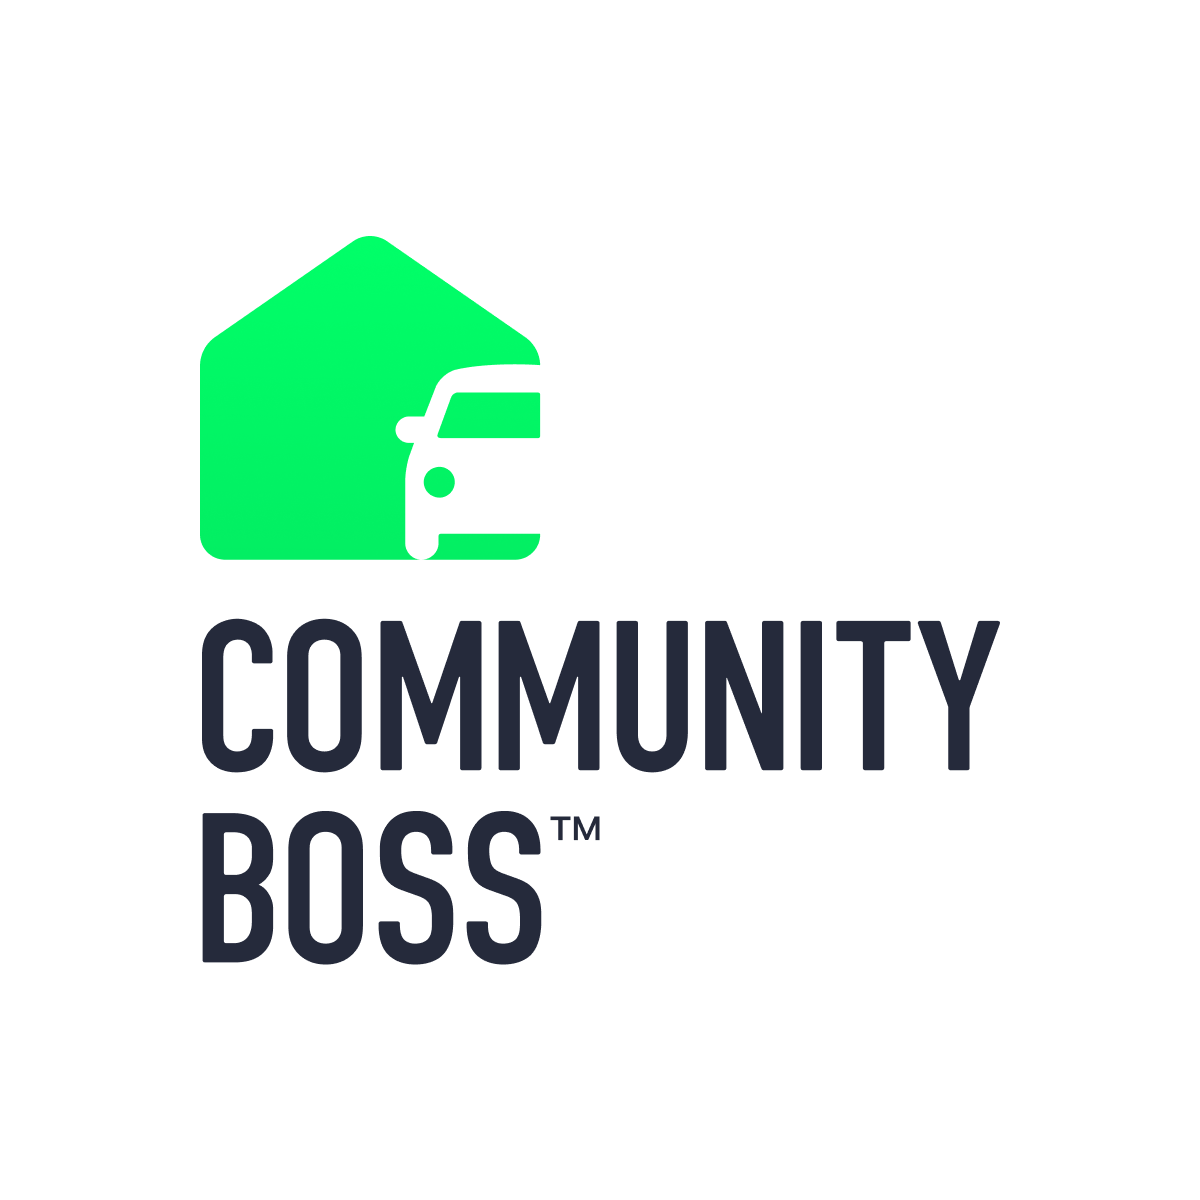 Community Boss